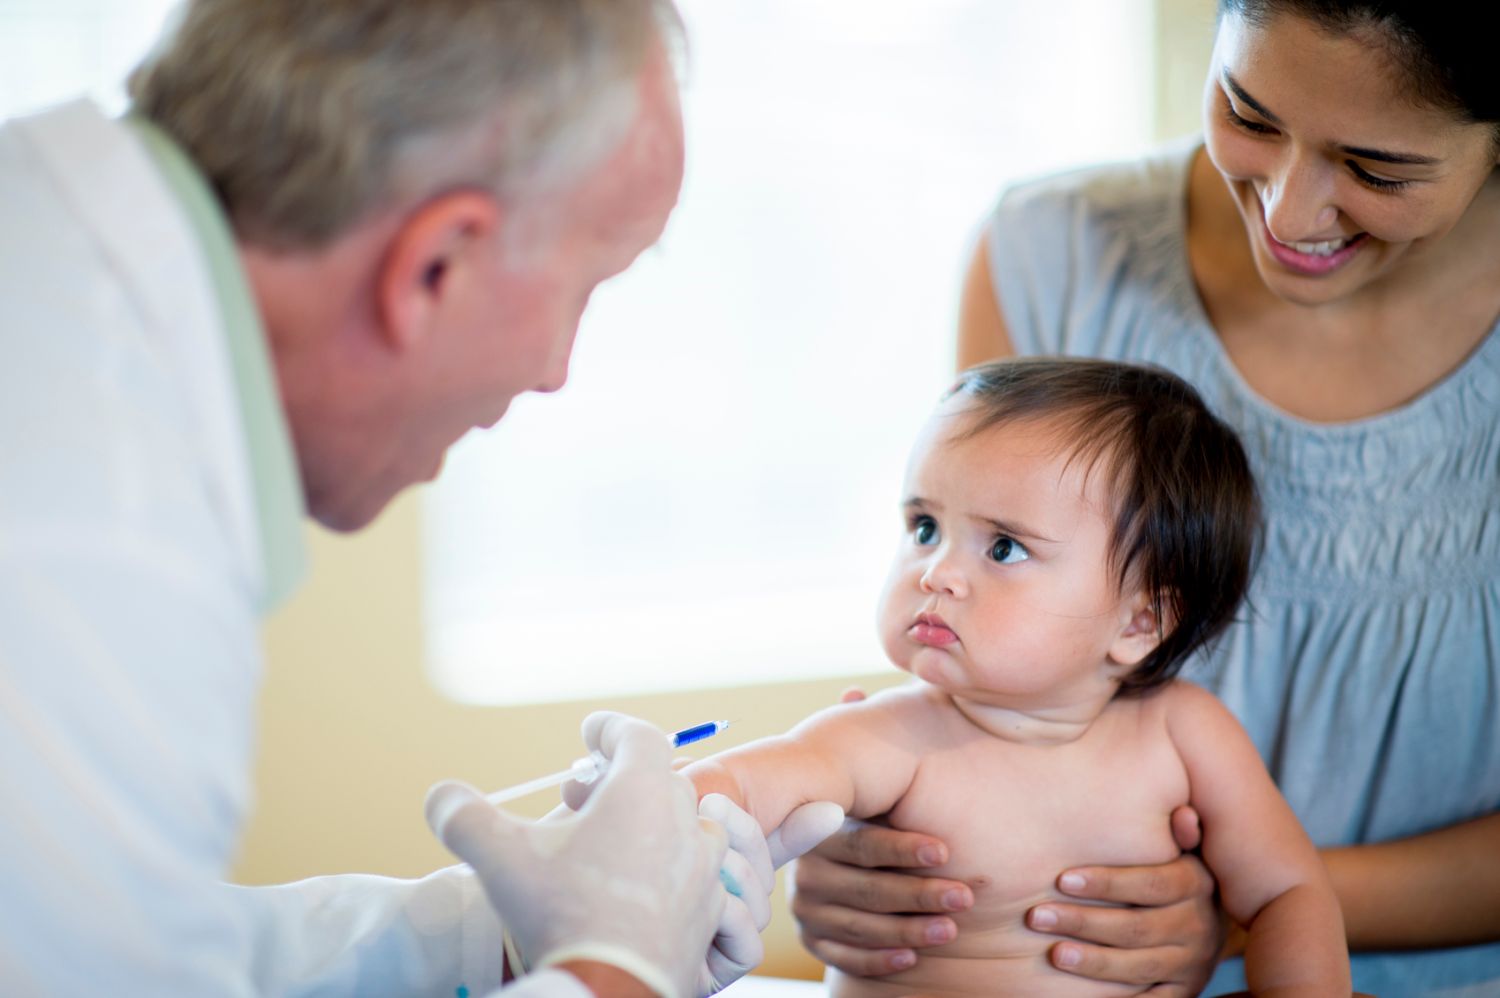 https://images.lifeline.de/img/krankheiten/origs158557/5729472355-w1500-h1500/baby-bekommt-impfung.jpg